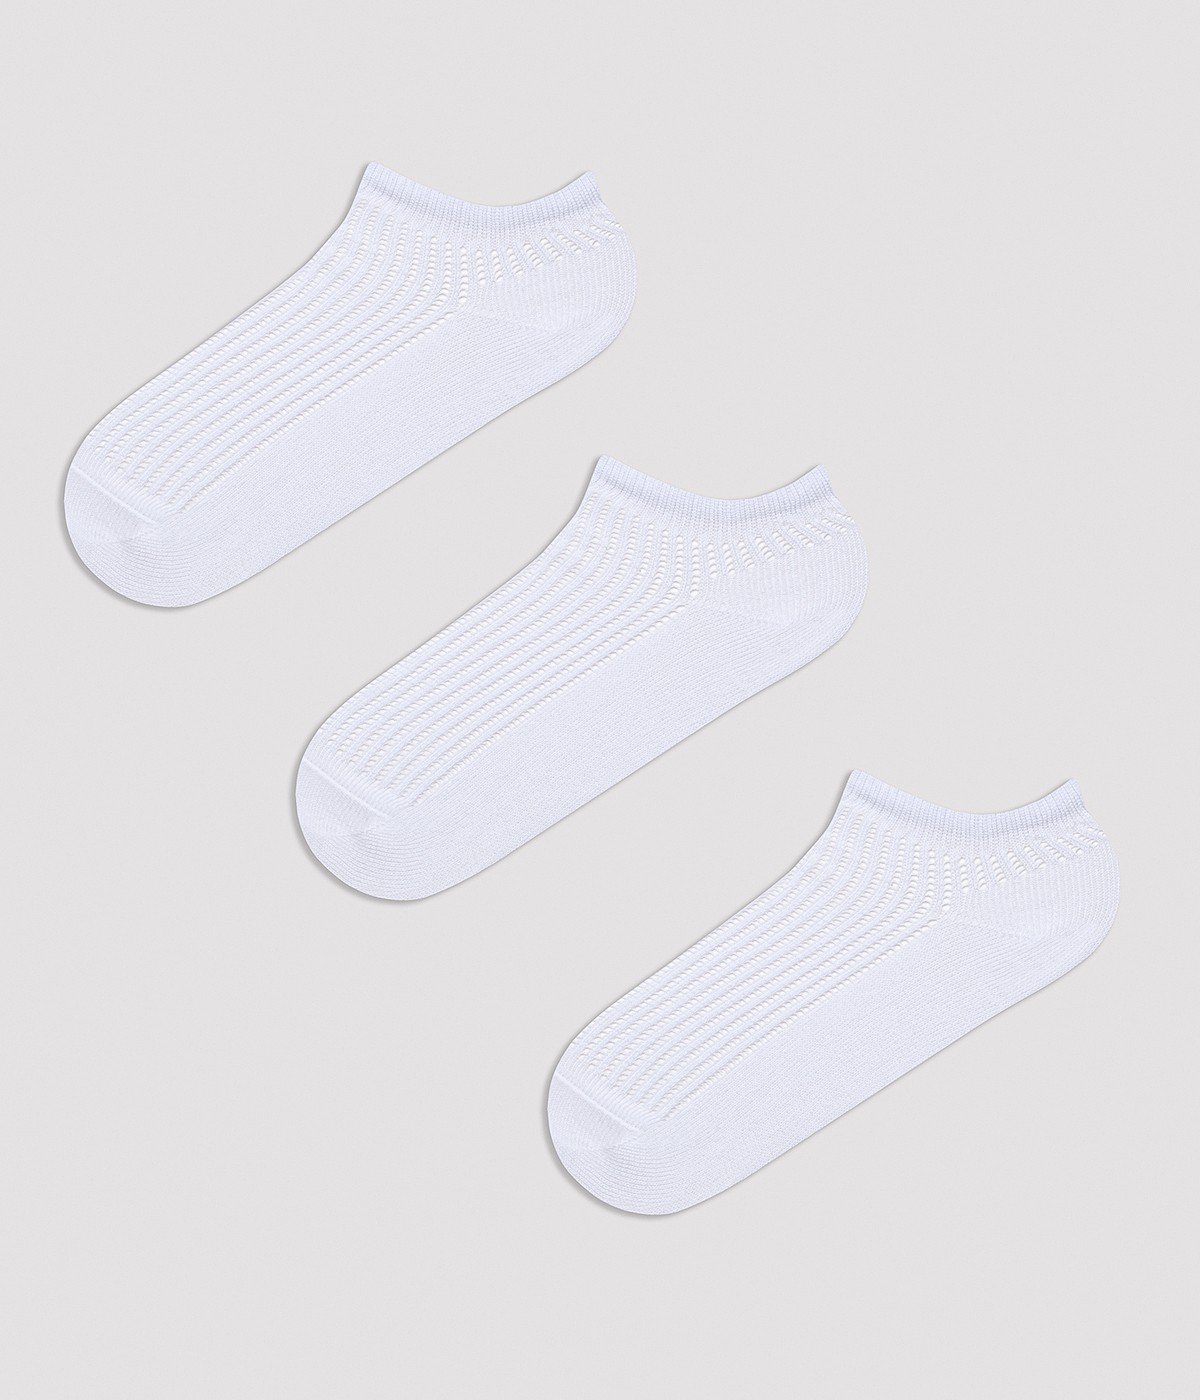 Basic Colosio 3in1 Liner Socks